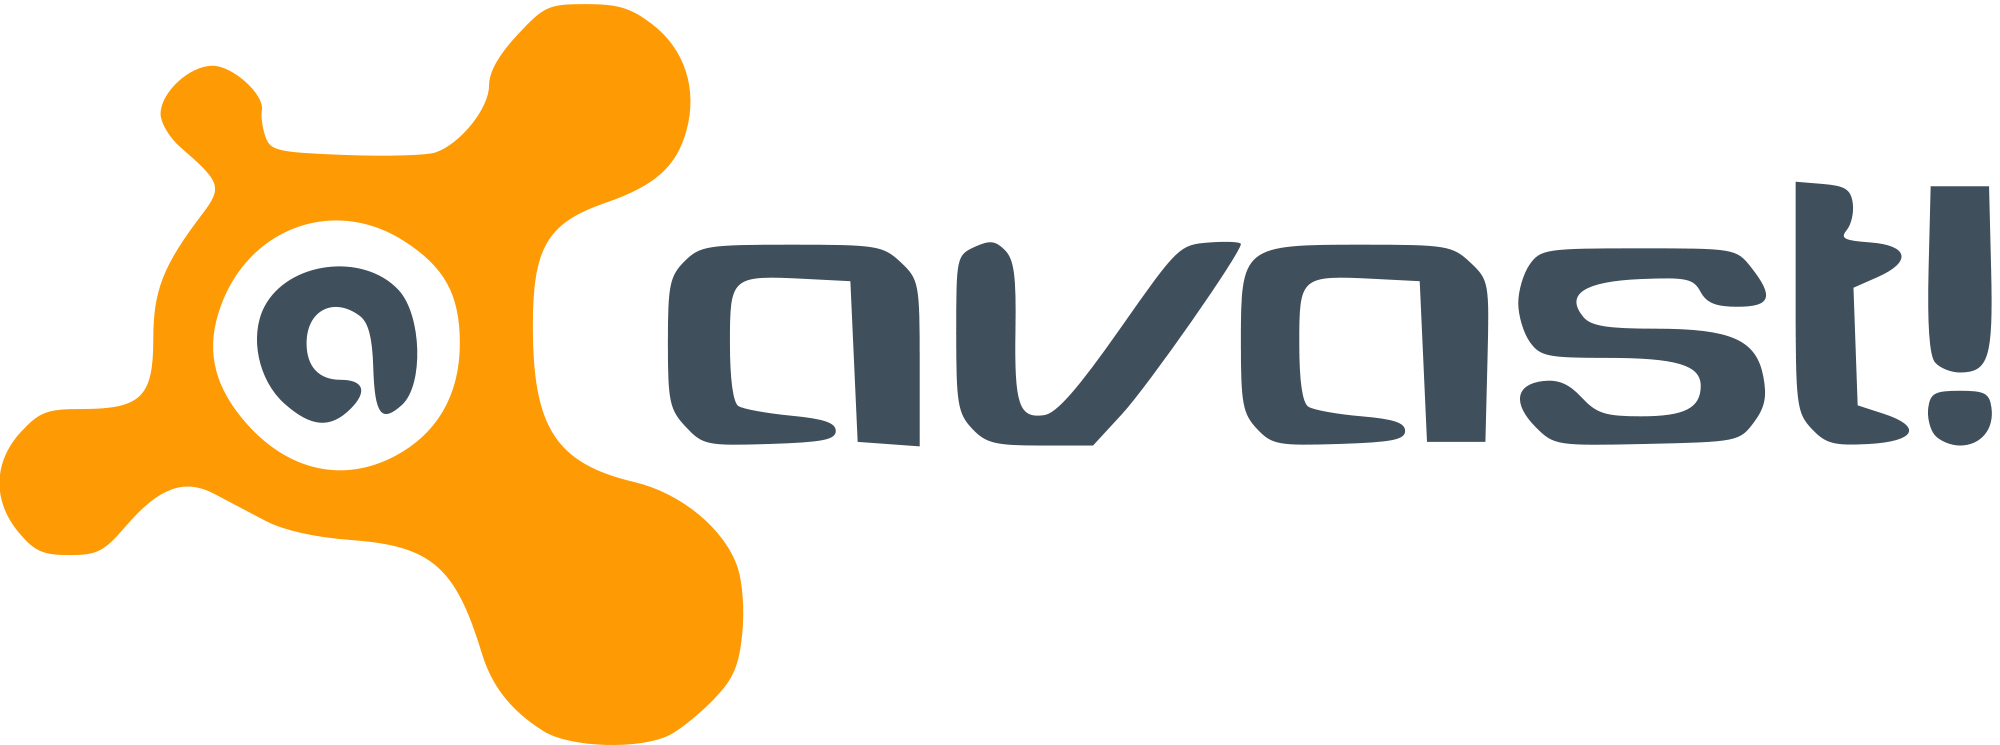 Avast Antivirus Free Download